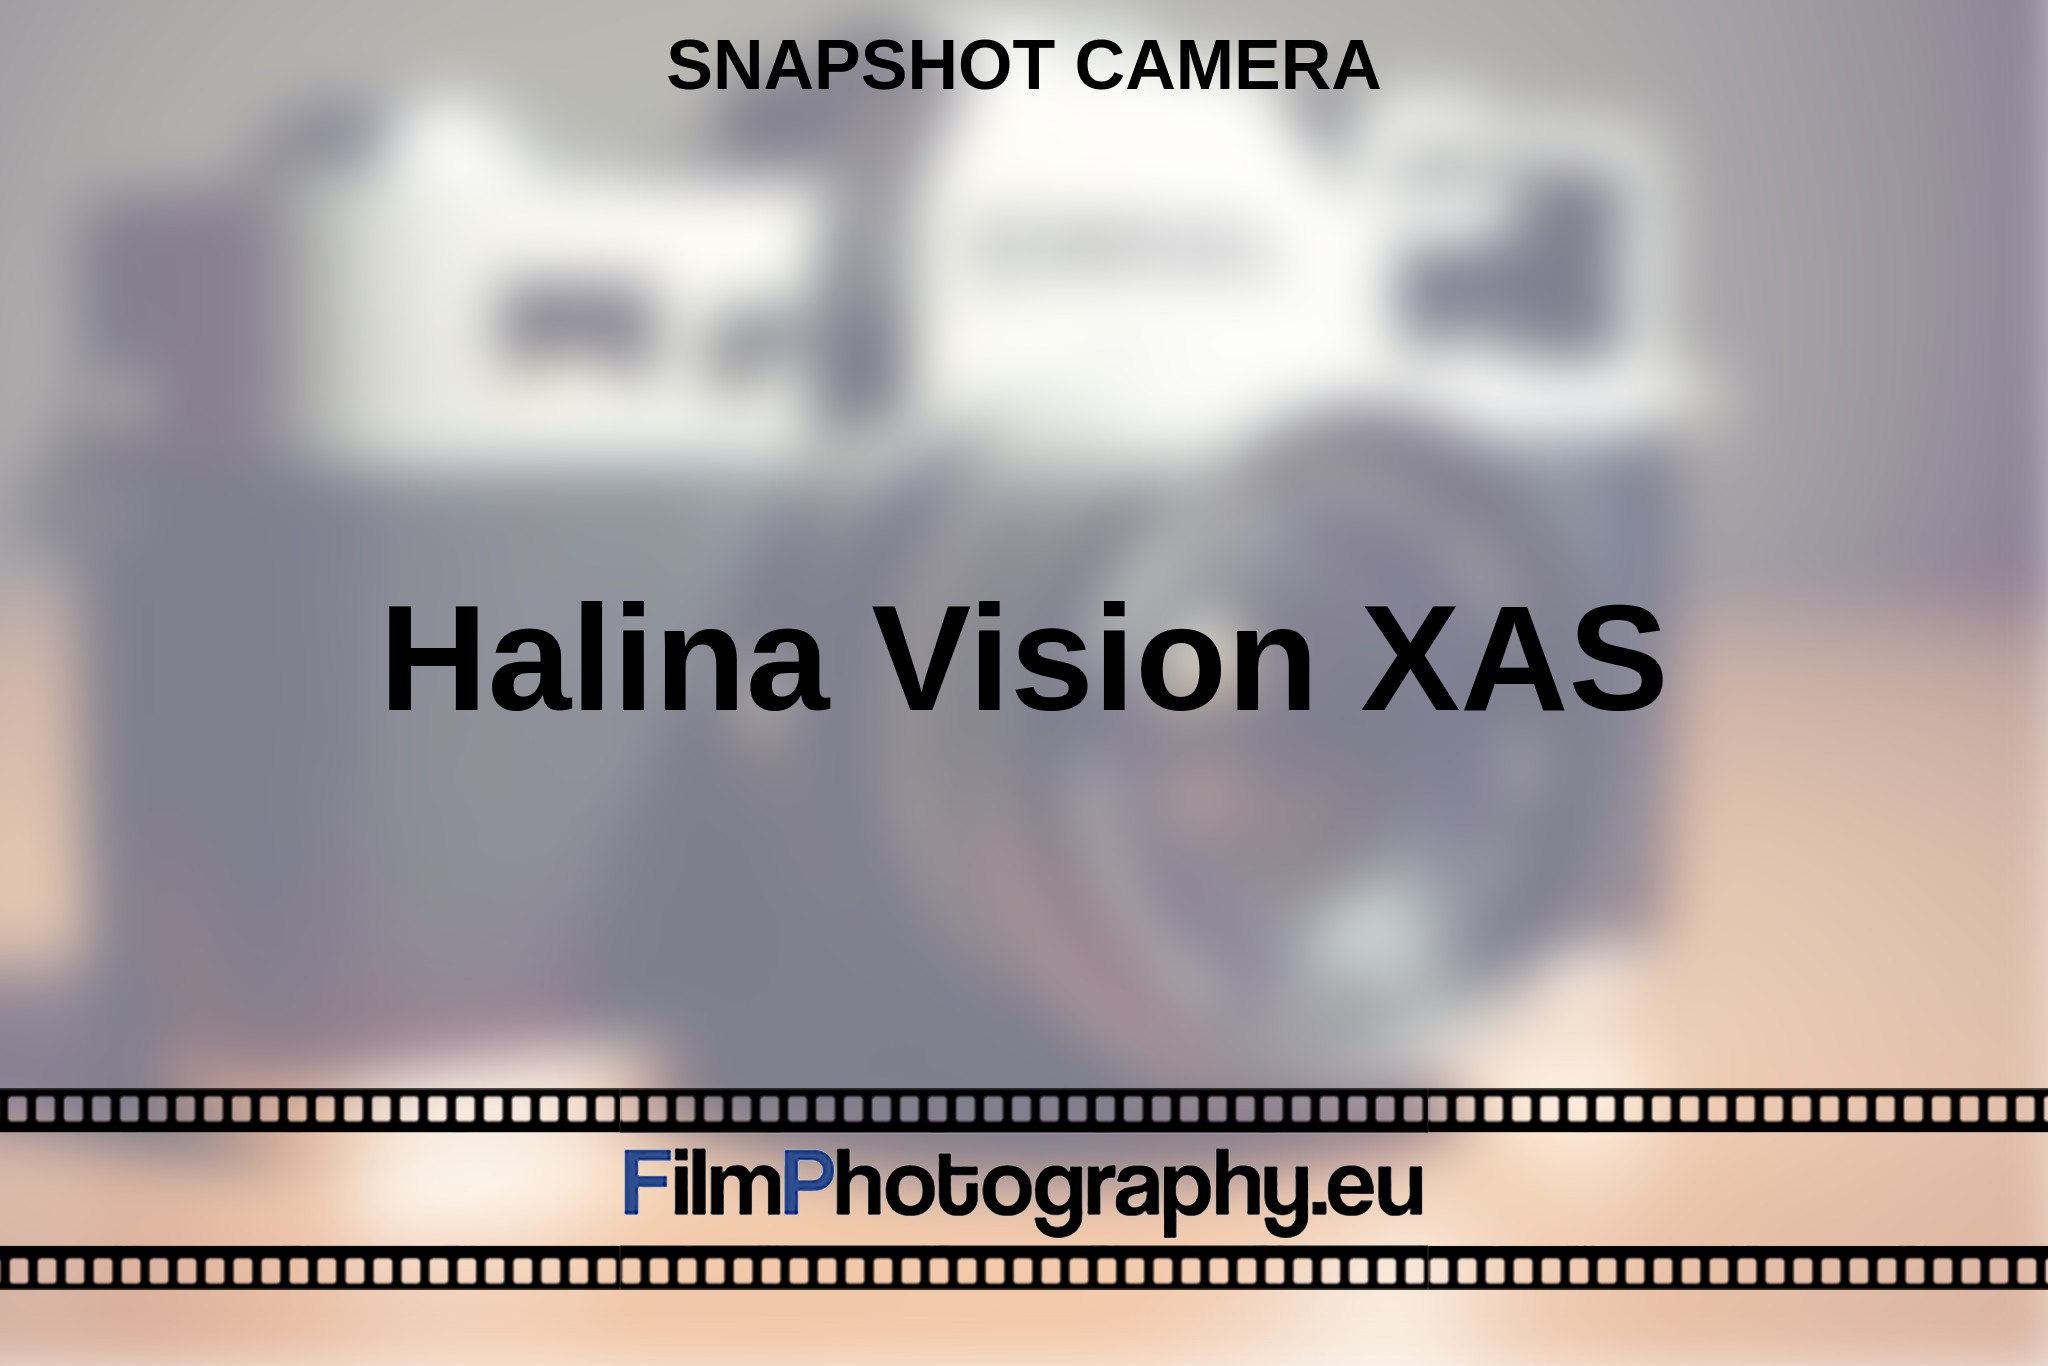 halina-vision-xas-snapshot-camera-en-bnv.jpg